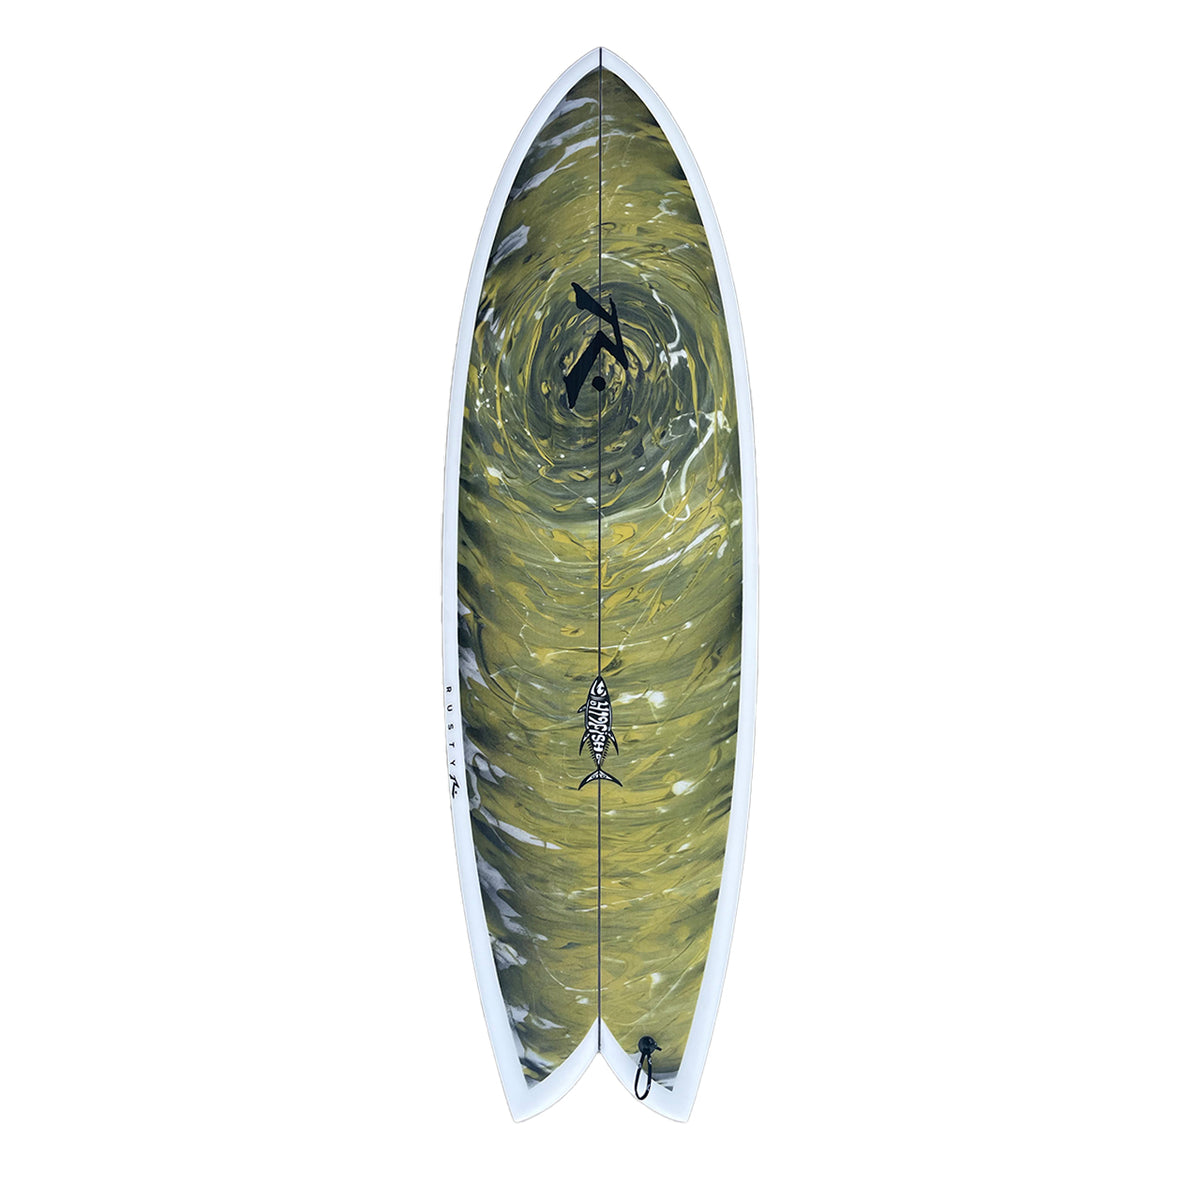 419fish - Alternative - Rusty Surfboards - Top View - Dark Gold Swirl